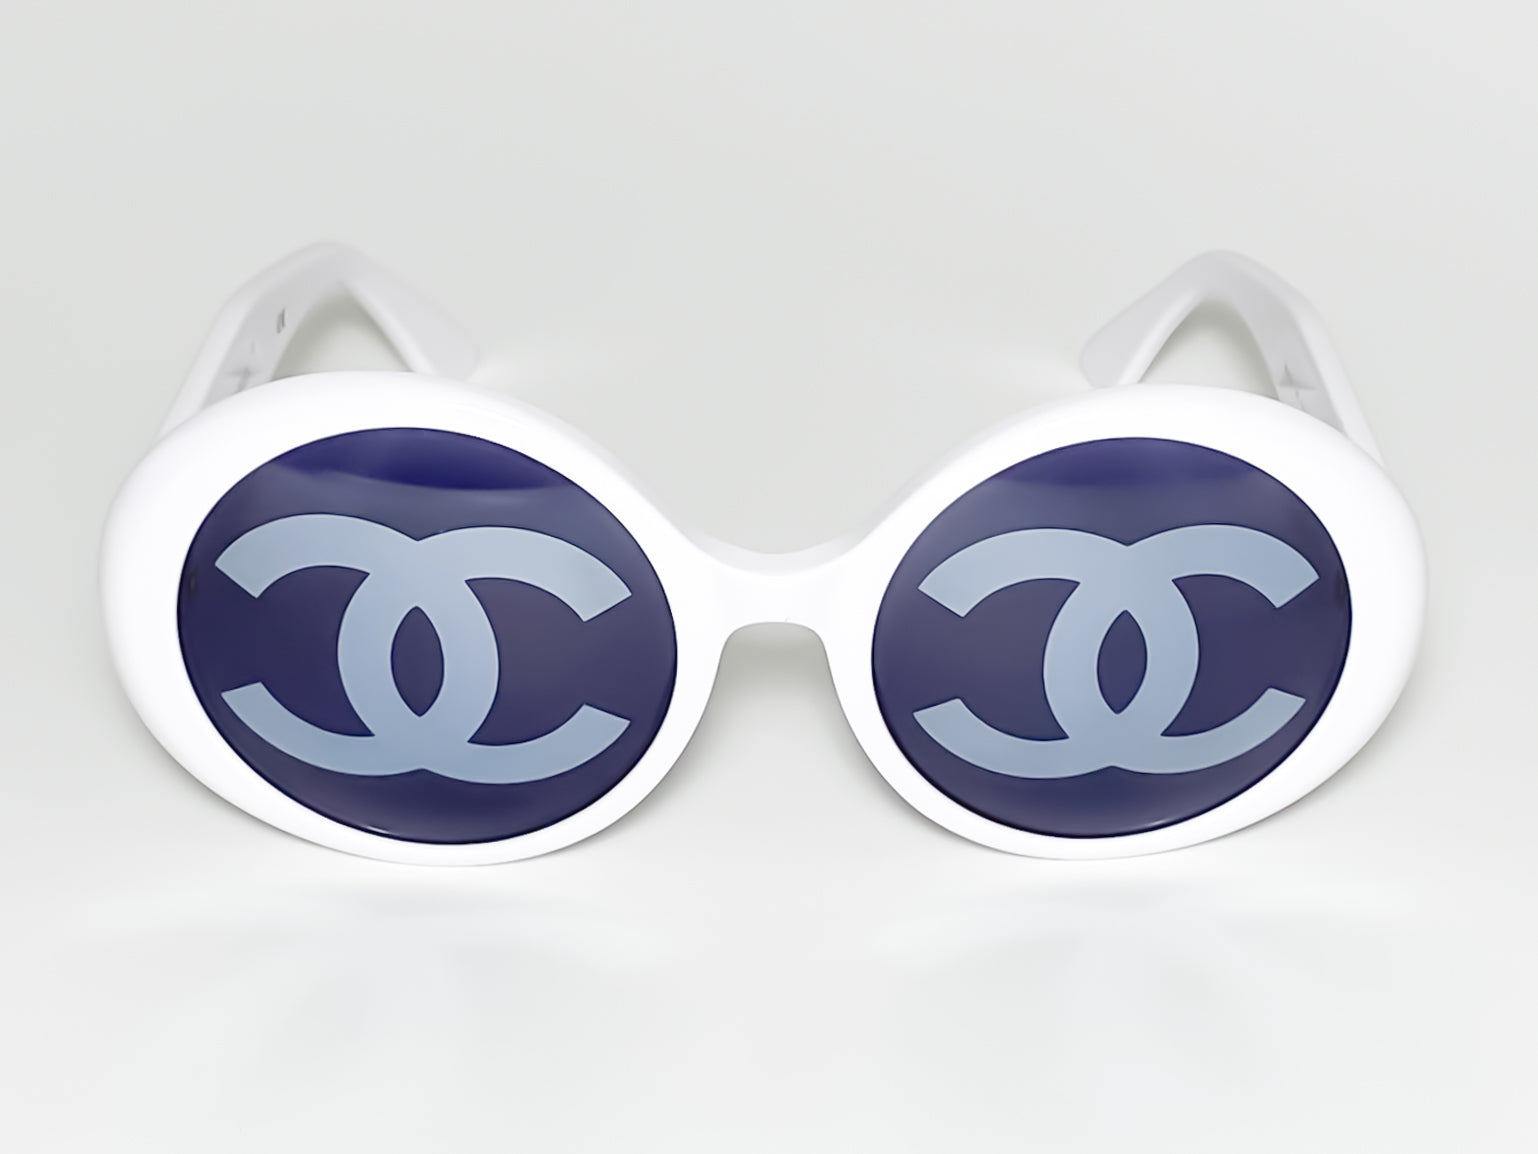 Chanel CC 1993 White Round 01945 Sunglasses